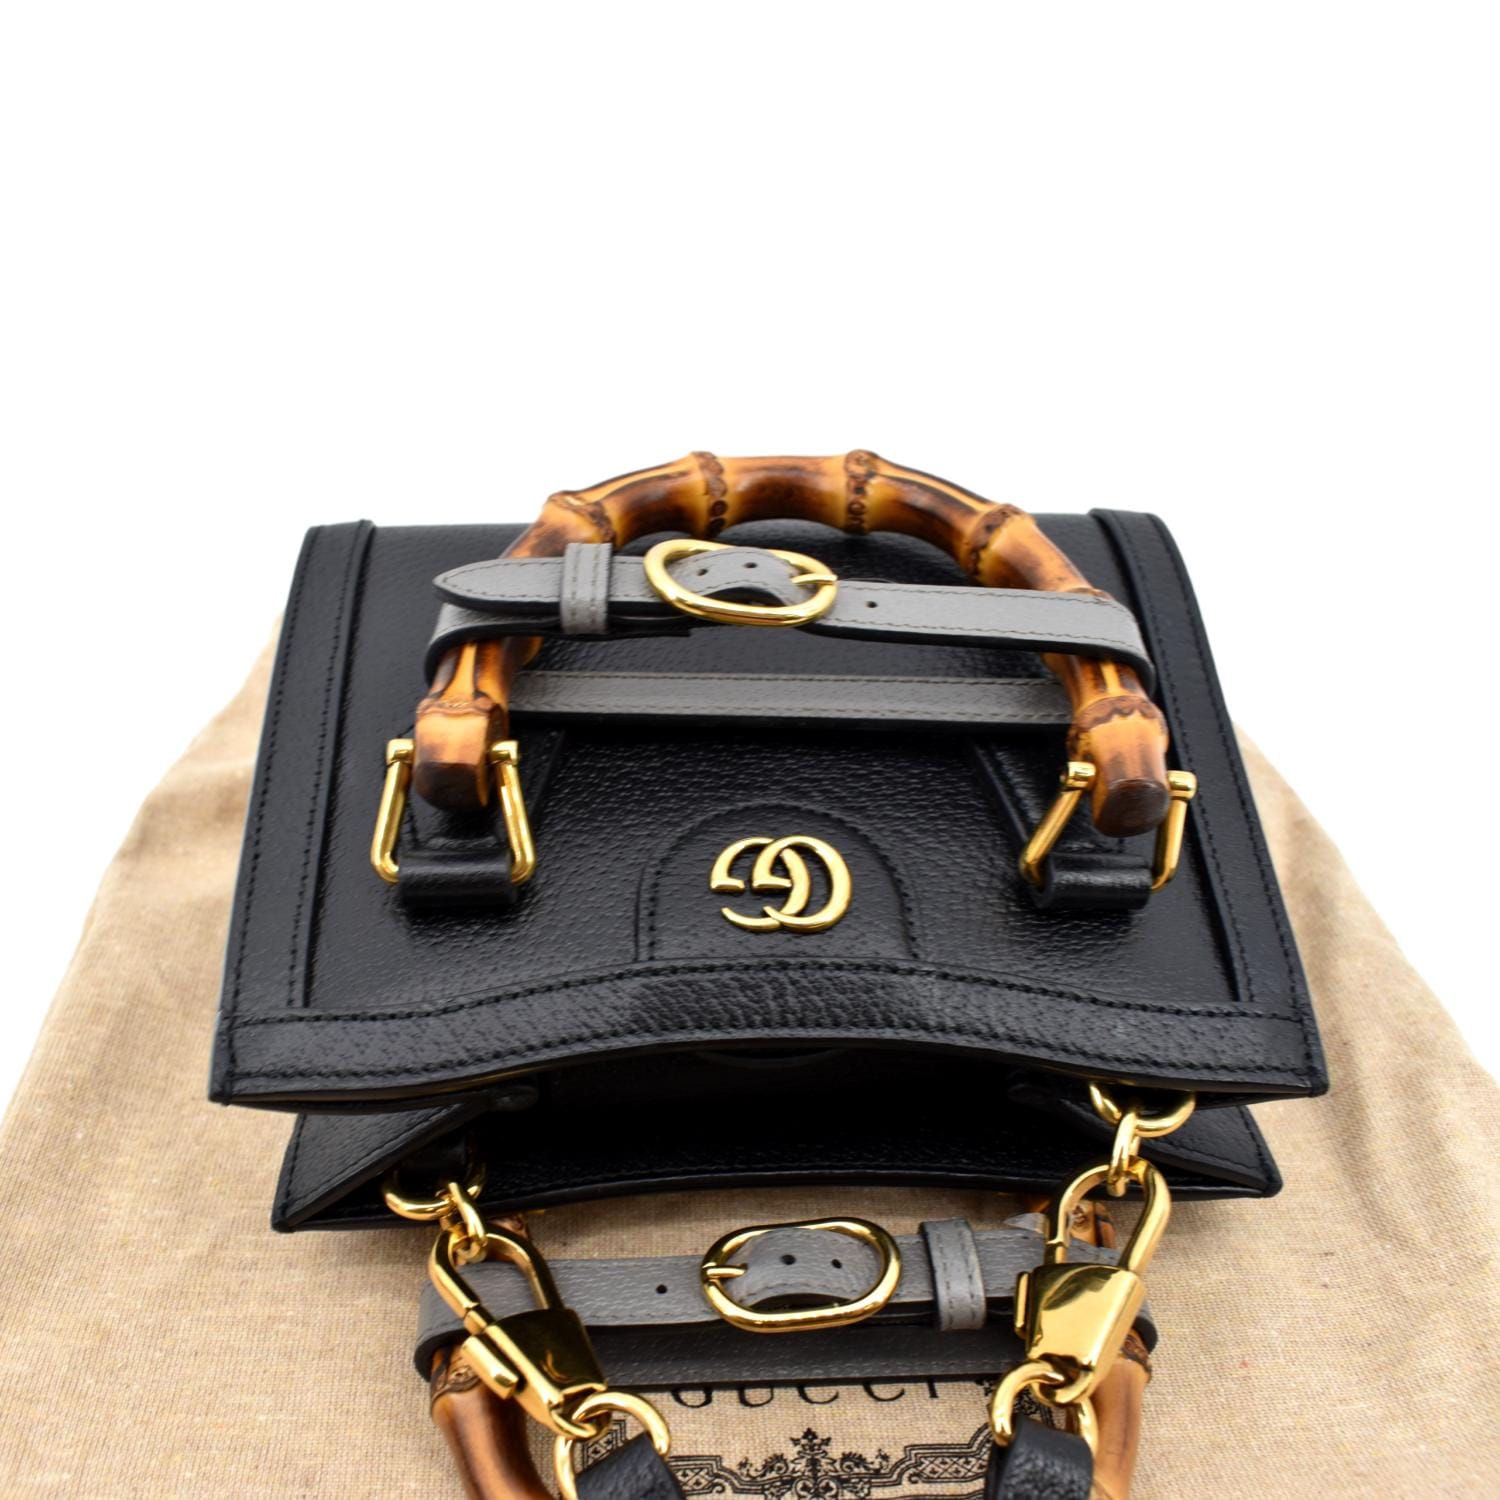 Gucci Diana Mini Leather Tote Bag in Black - Gucci